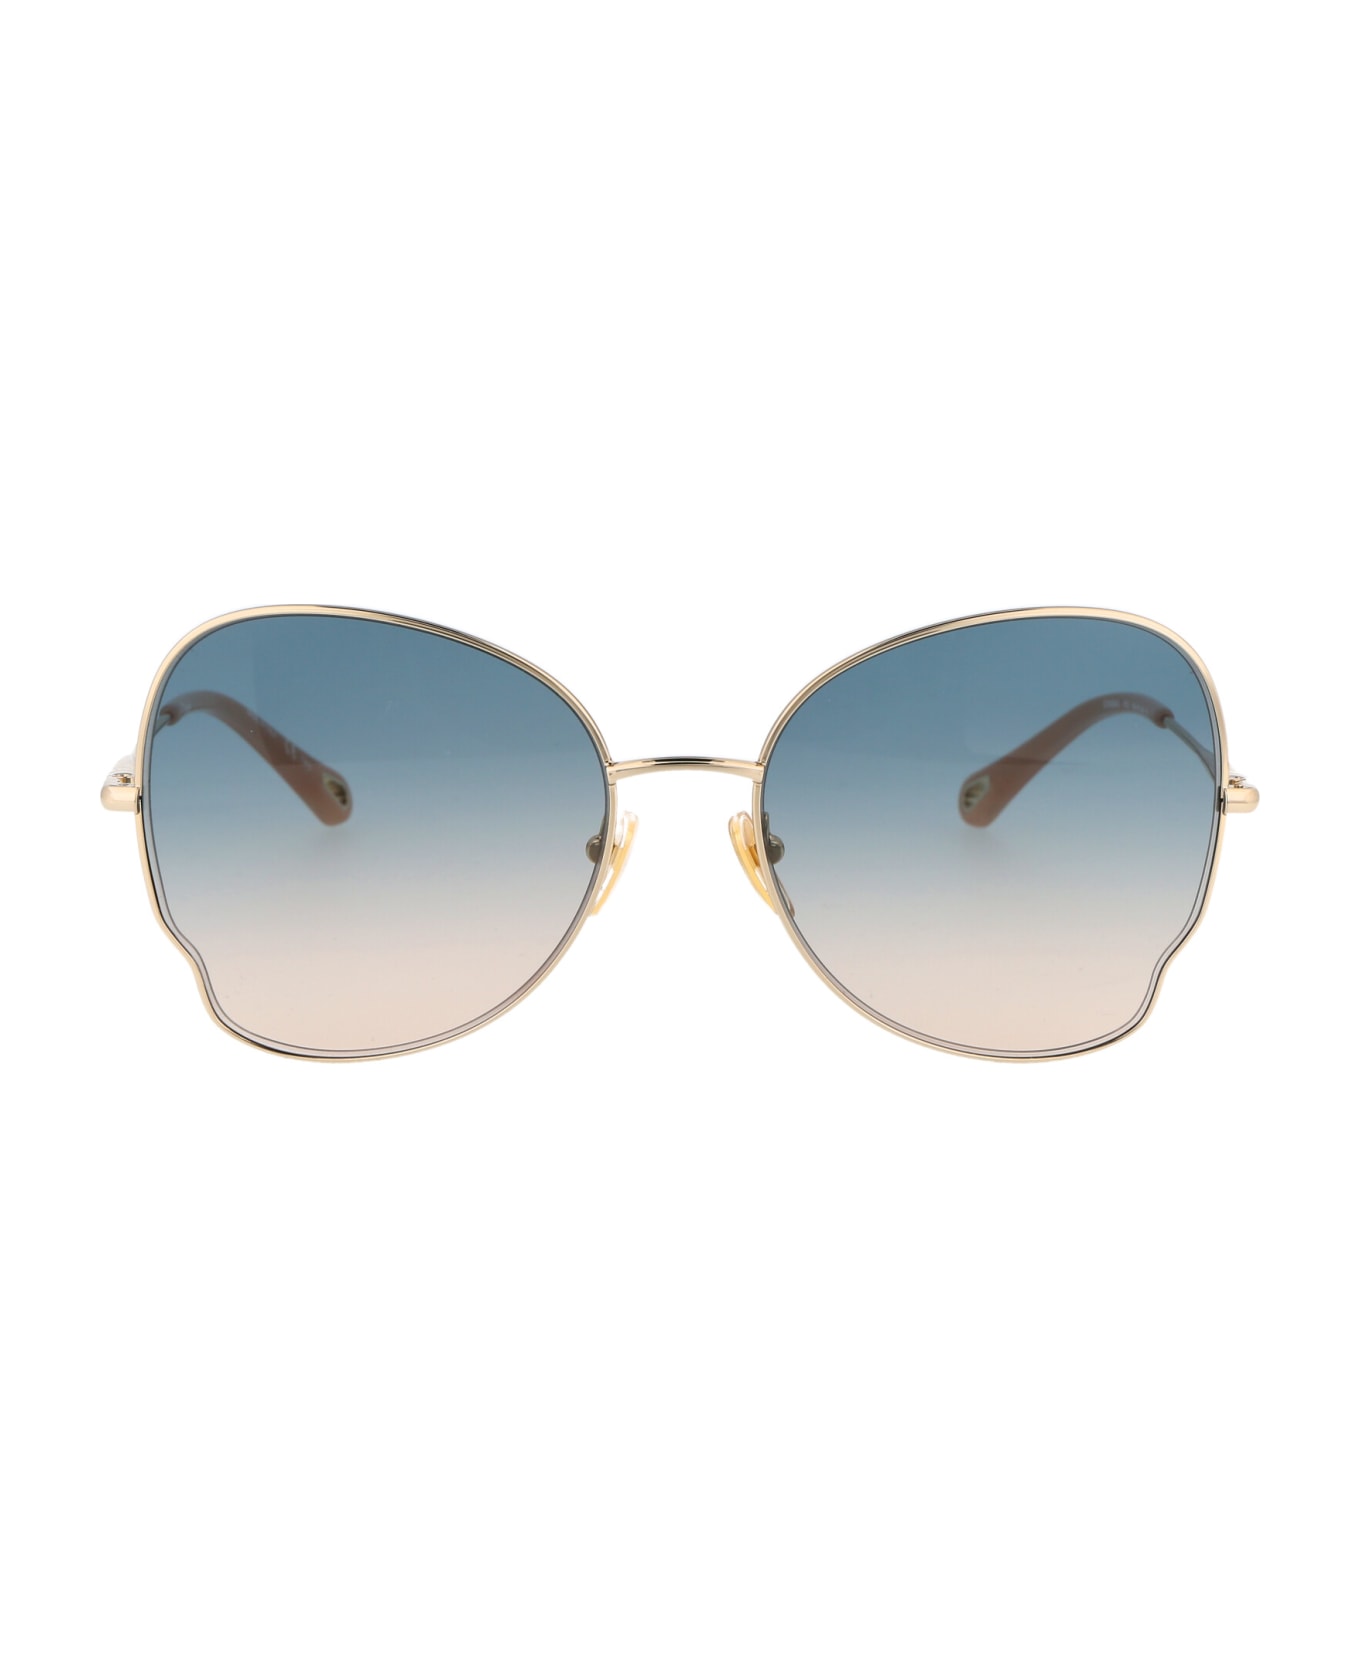 Chloé Eyewear Ch0094s Sunglasses - 003 GOLD GOLD GREEN サングラス